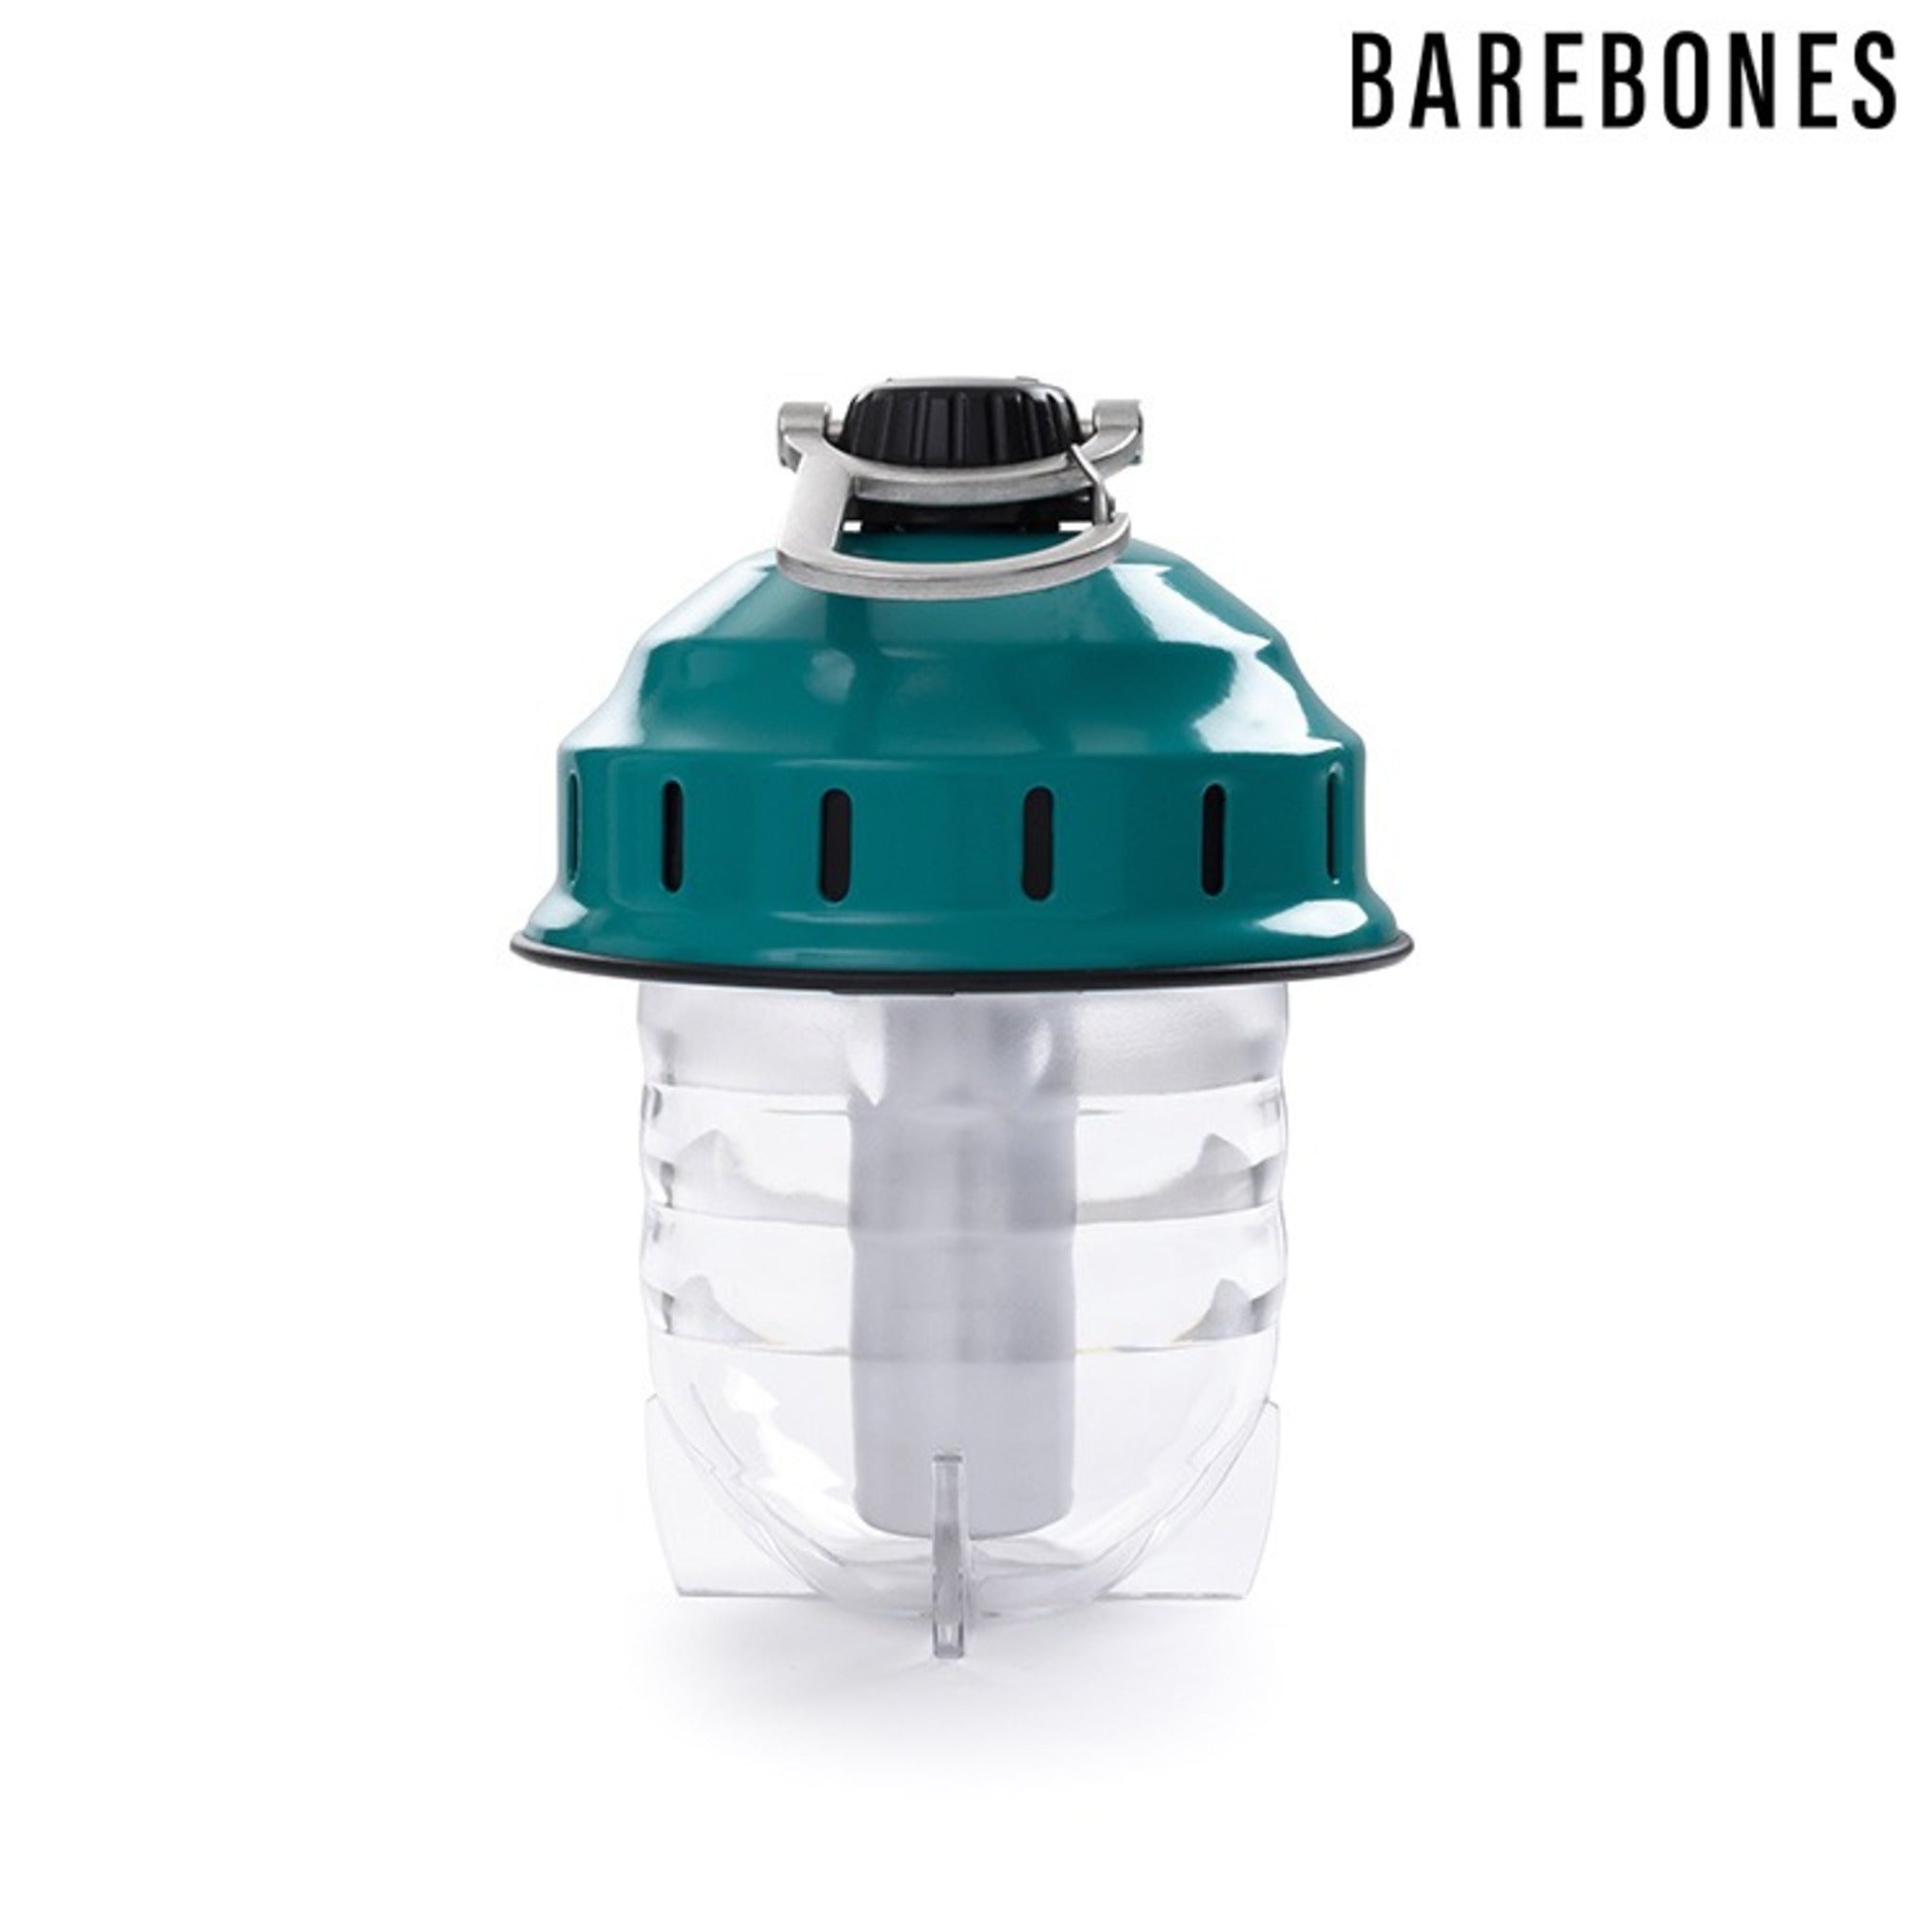 【Barebones】吊掛式營燈Beacon 藍綠色 LIV-236